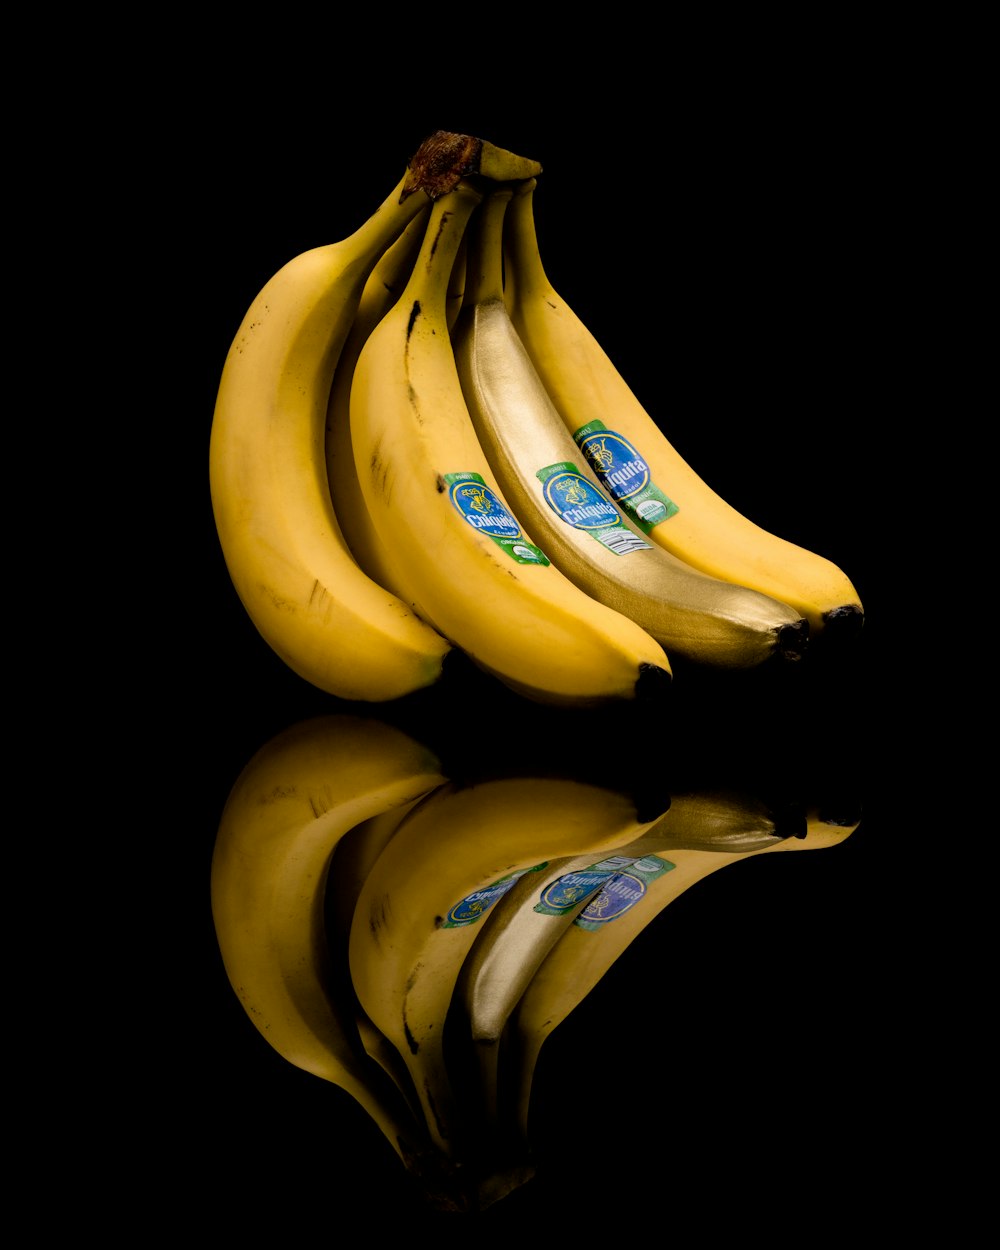 four ripe bananas